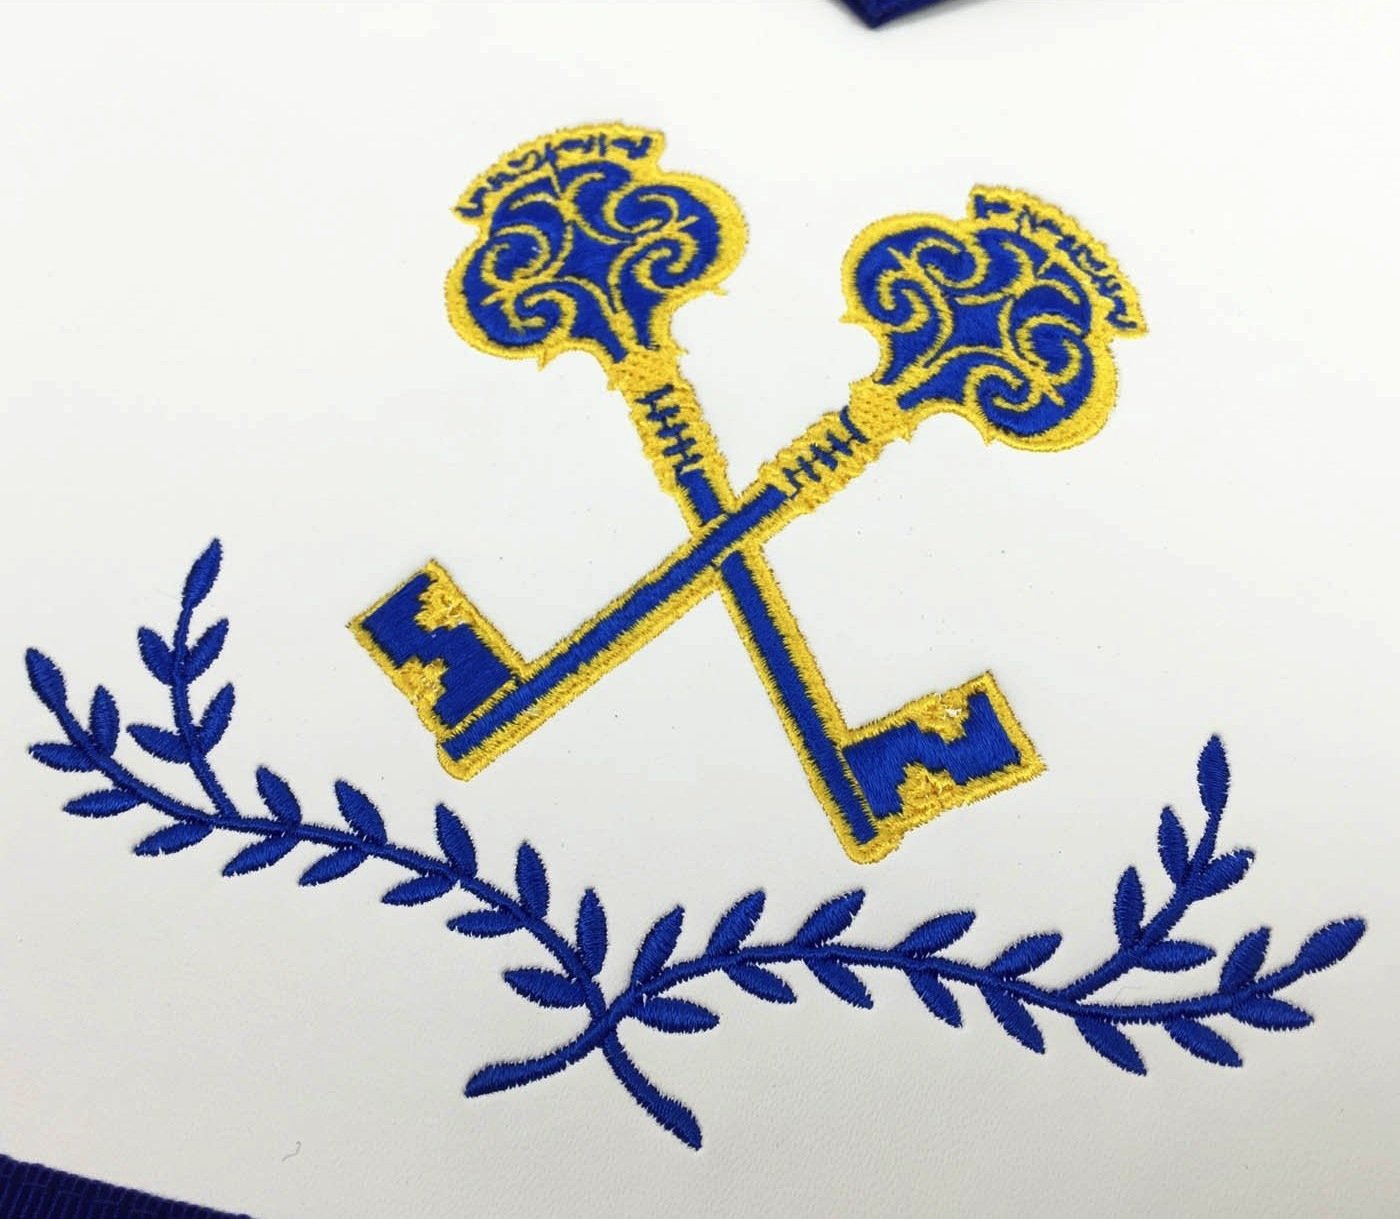 Officers Blue Lodge Officer Apron Set - Royal Blue Ribbon Machine Embroidery (Set of 11) - Bricks Masons